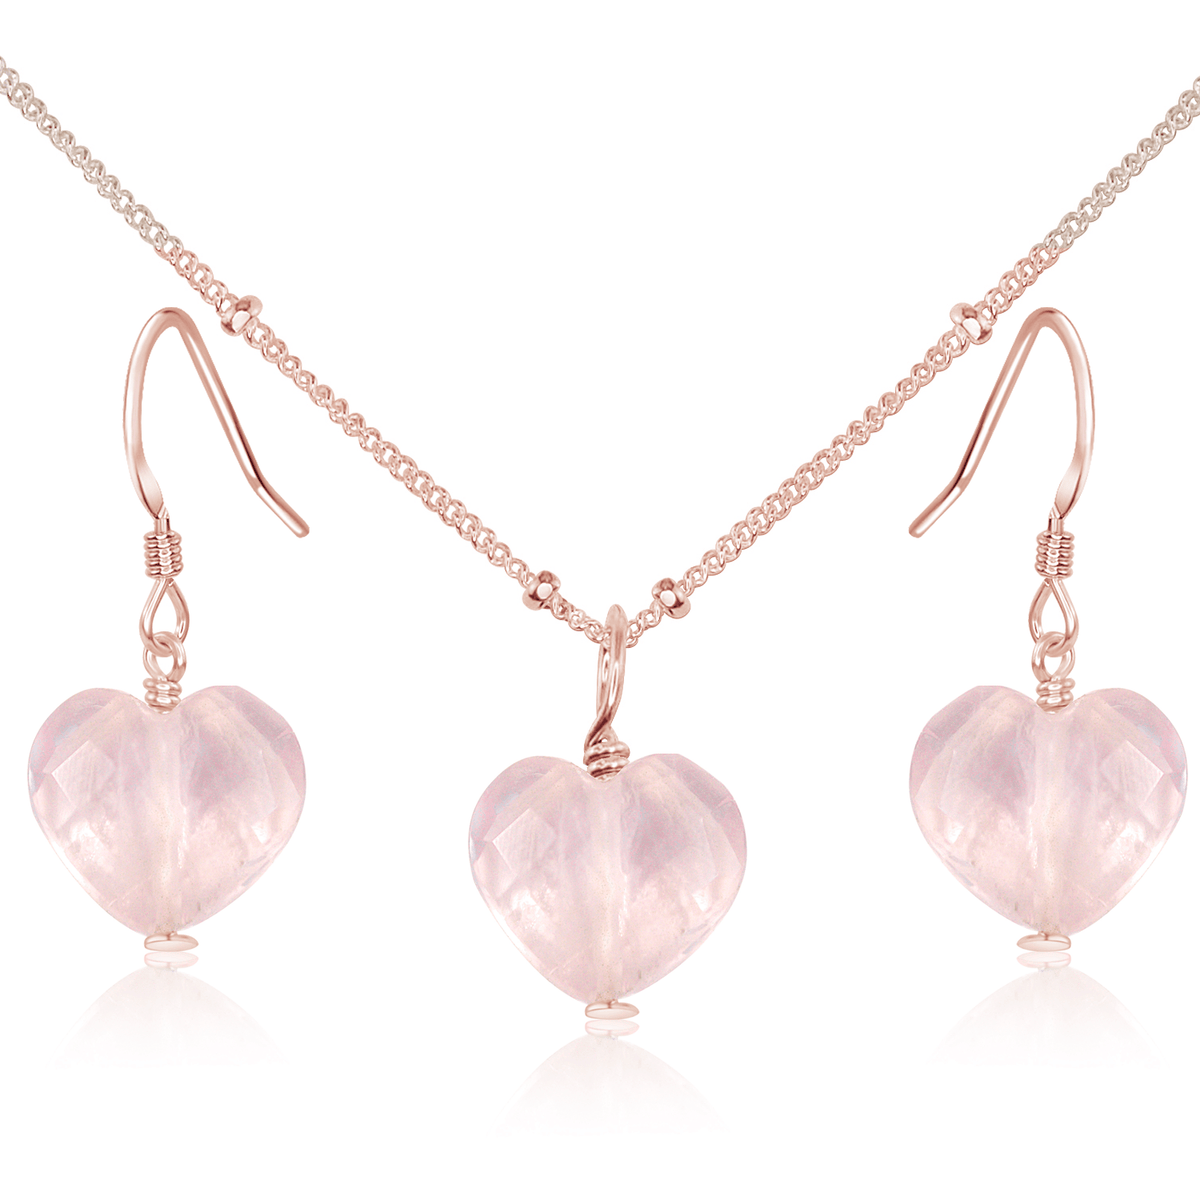 Rose Quartz Crystal Heart Jewellery Set - Rose Quartz Crystal Heart Jewellery Set - 14k Rose Gold Fill / Satellite / Necklace & Earrings - Luna Tide Handmade Crystal Jewellery